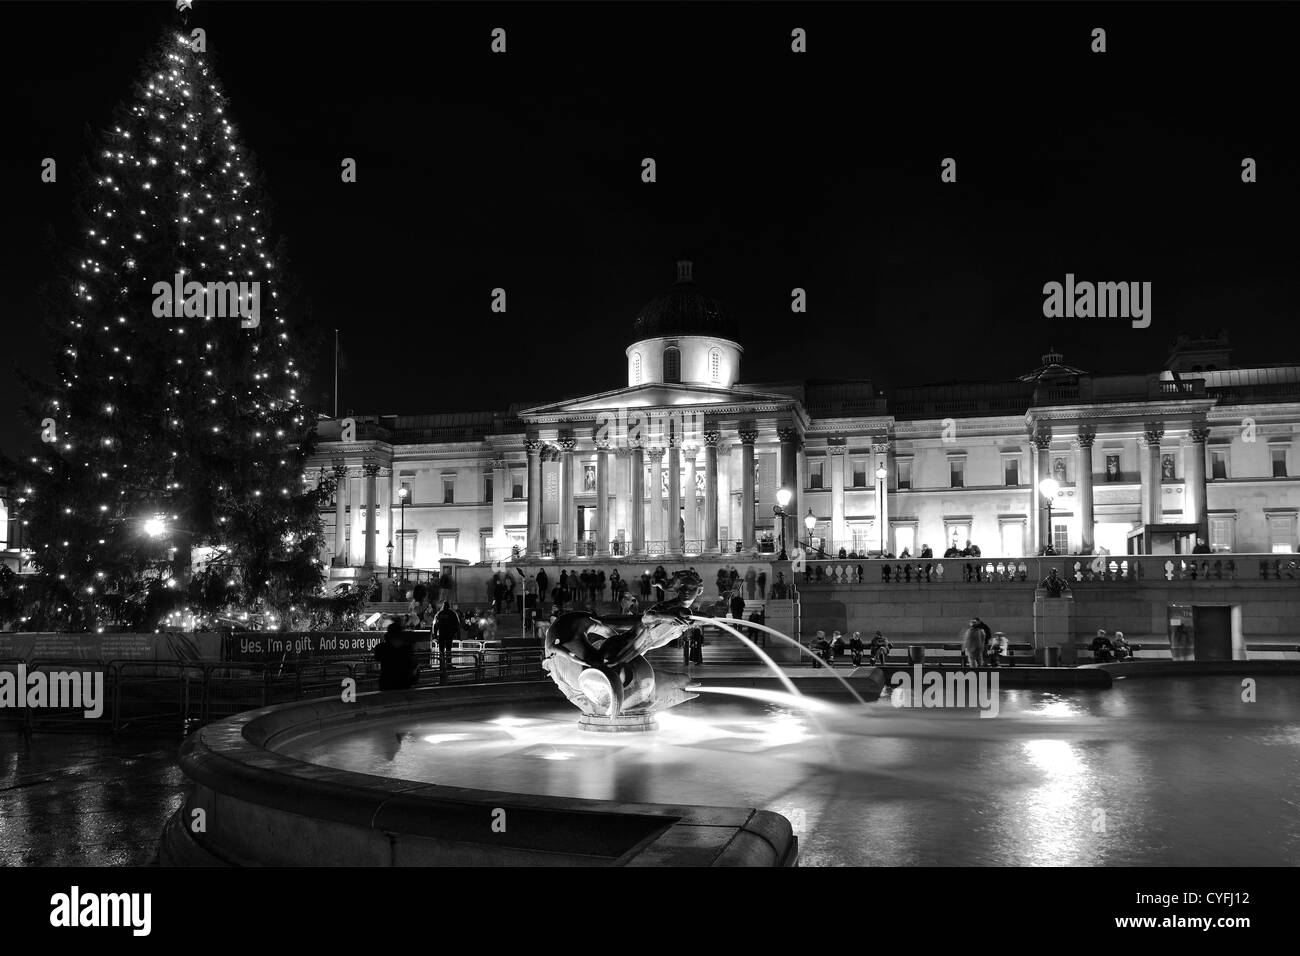 Illuminations de Noël, les fontaines d'eau la nuit, National Gallery, Trafalgar Square, City Of Westminster, Londres, Angleterre Banque D'Images